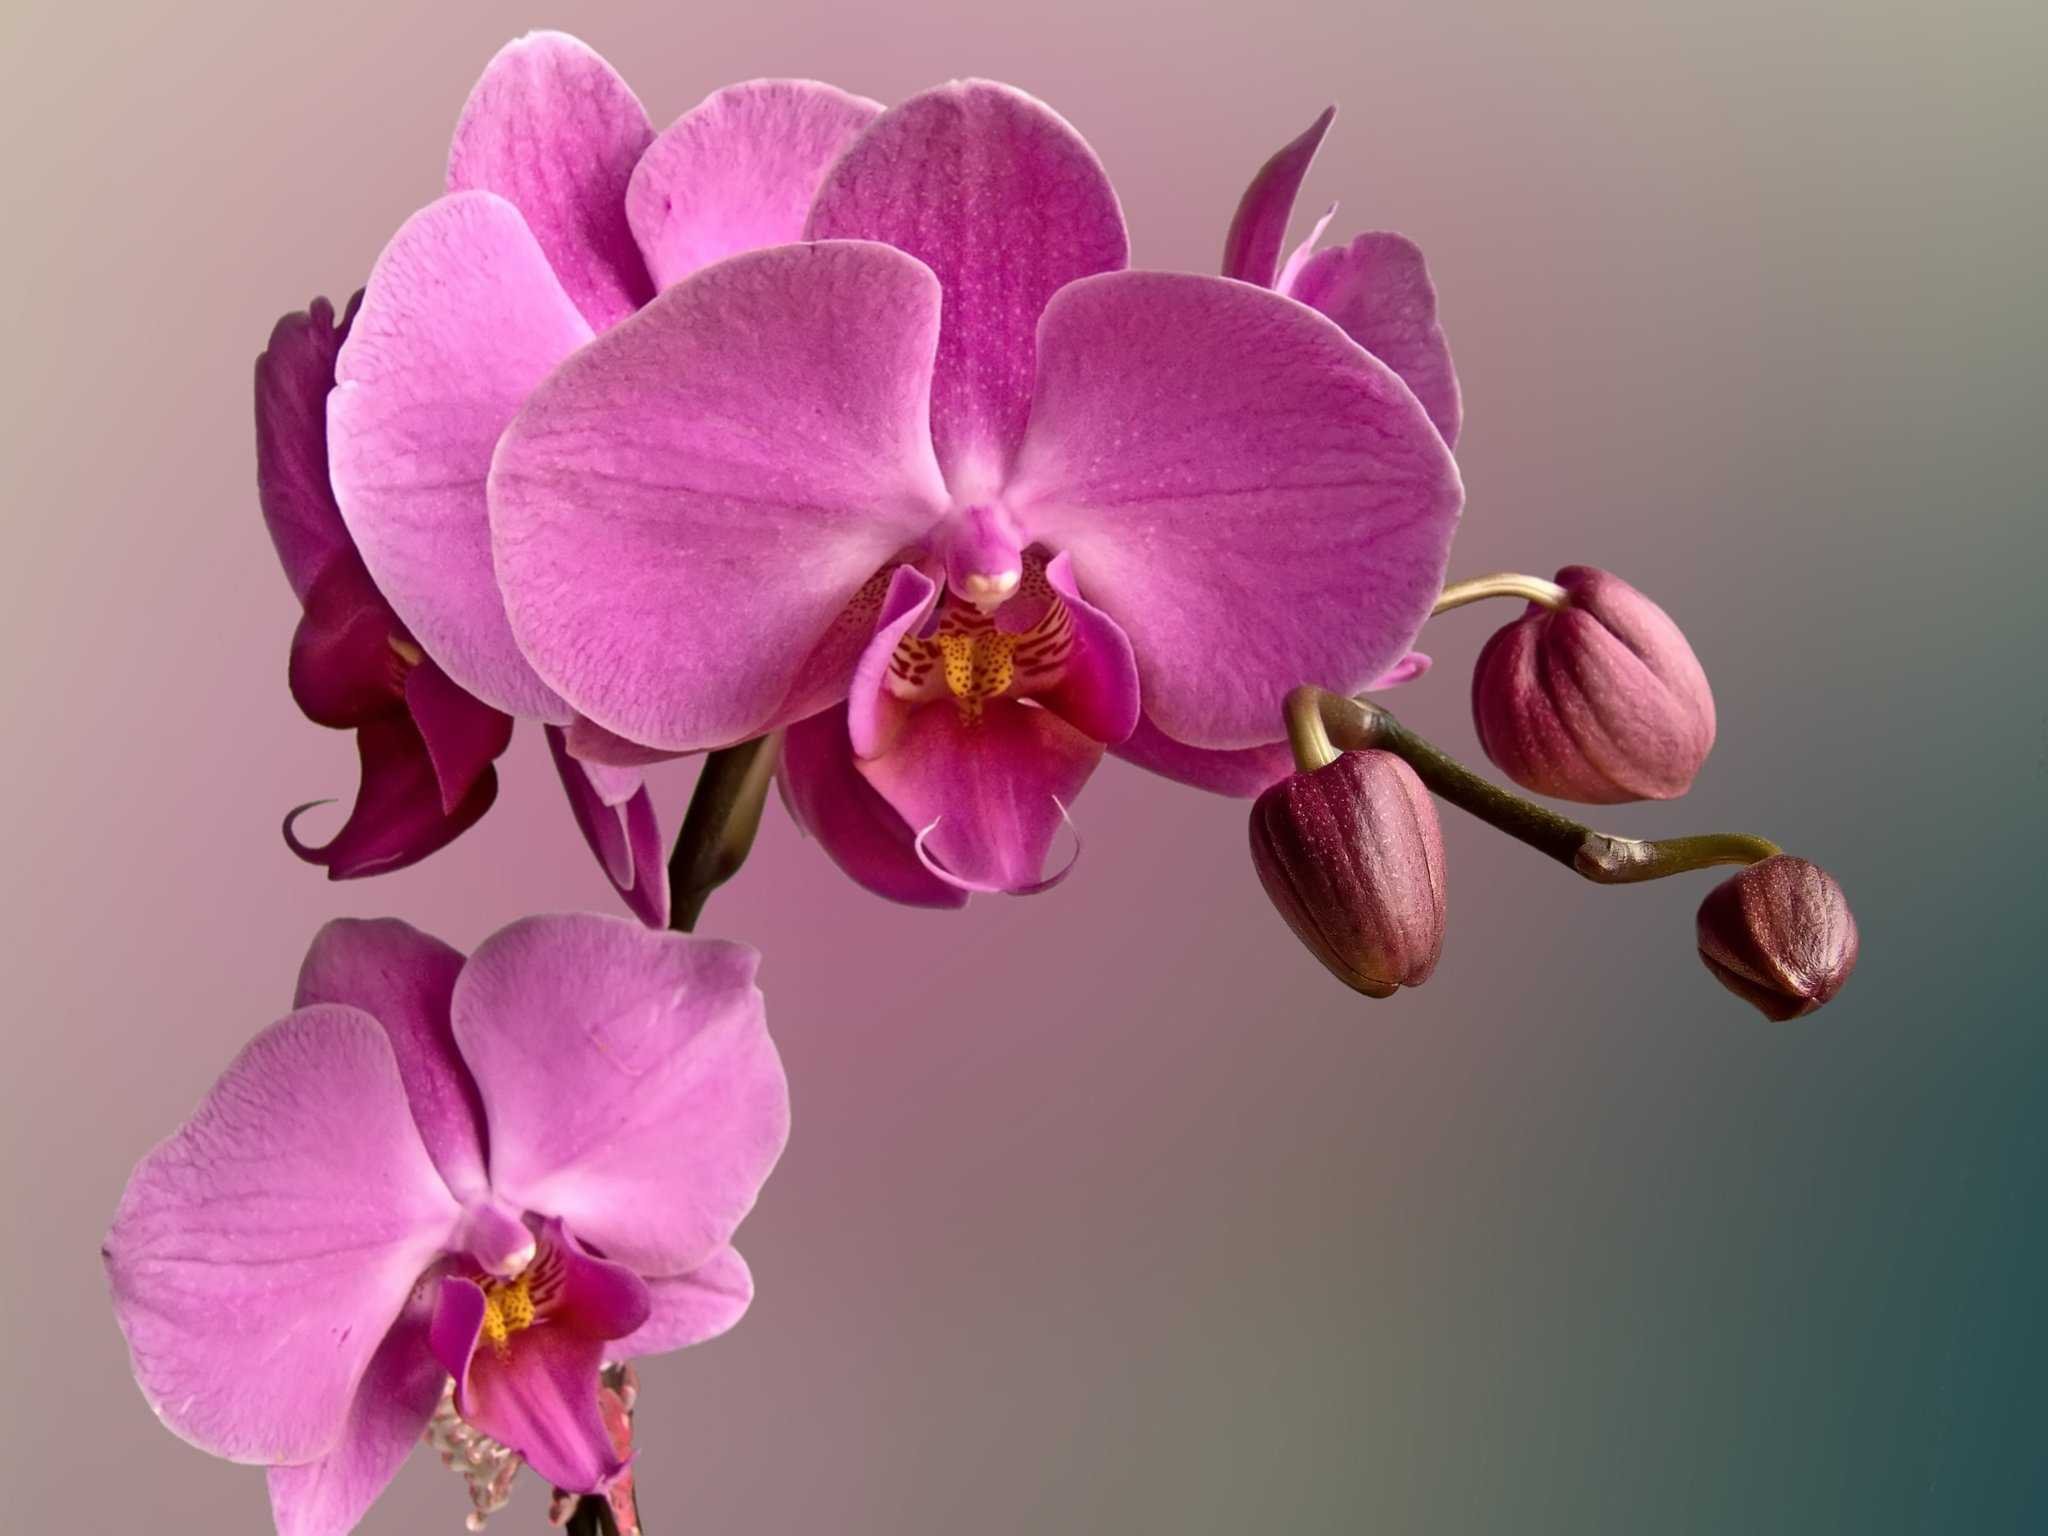 Flowers orchids. Фаленопсис Паваротти. Пиниф Орхидея. Пиниф Орхидея фаленопсис. Орхидея фаленопсис Менкар.